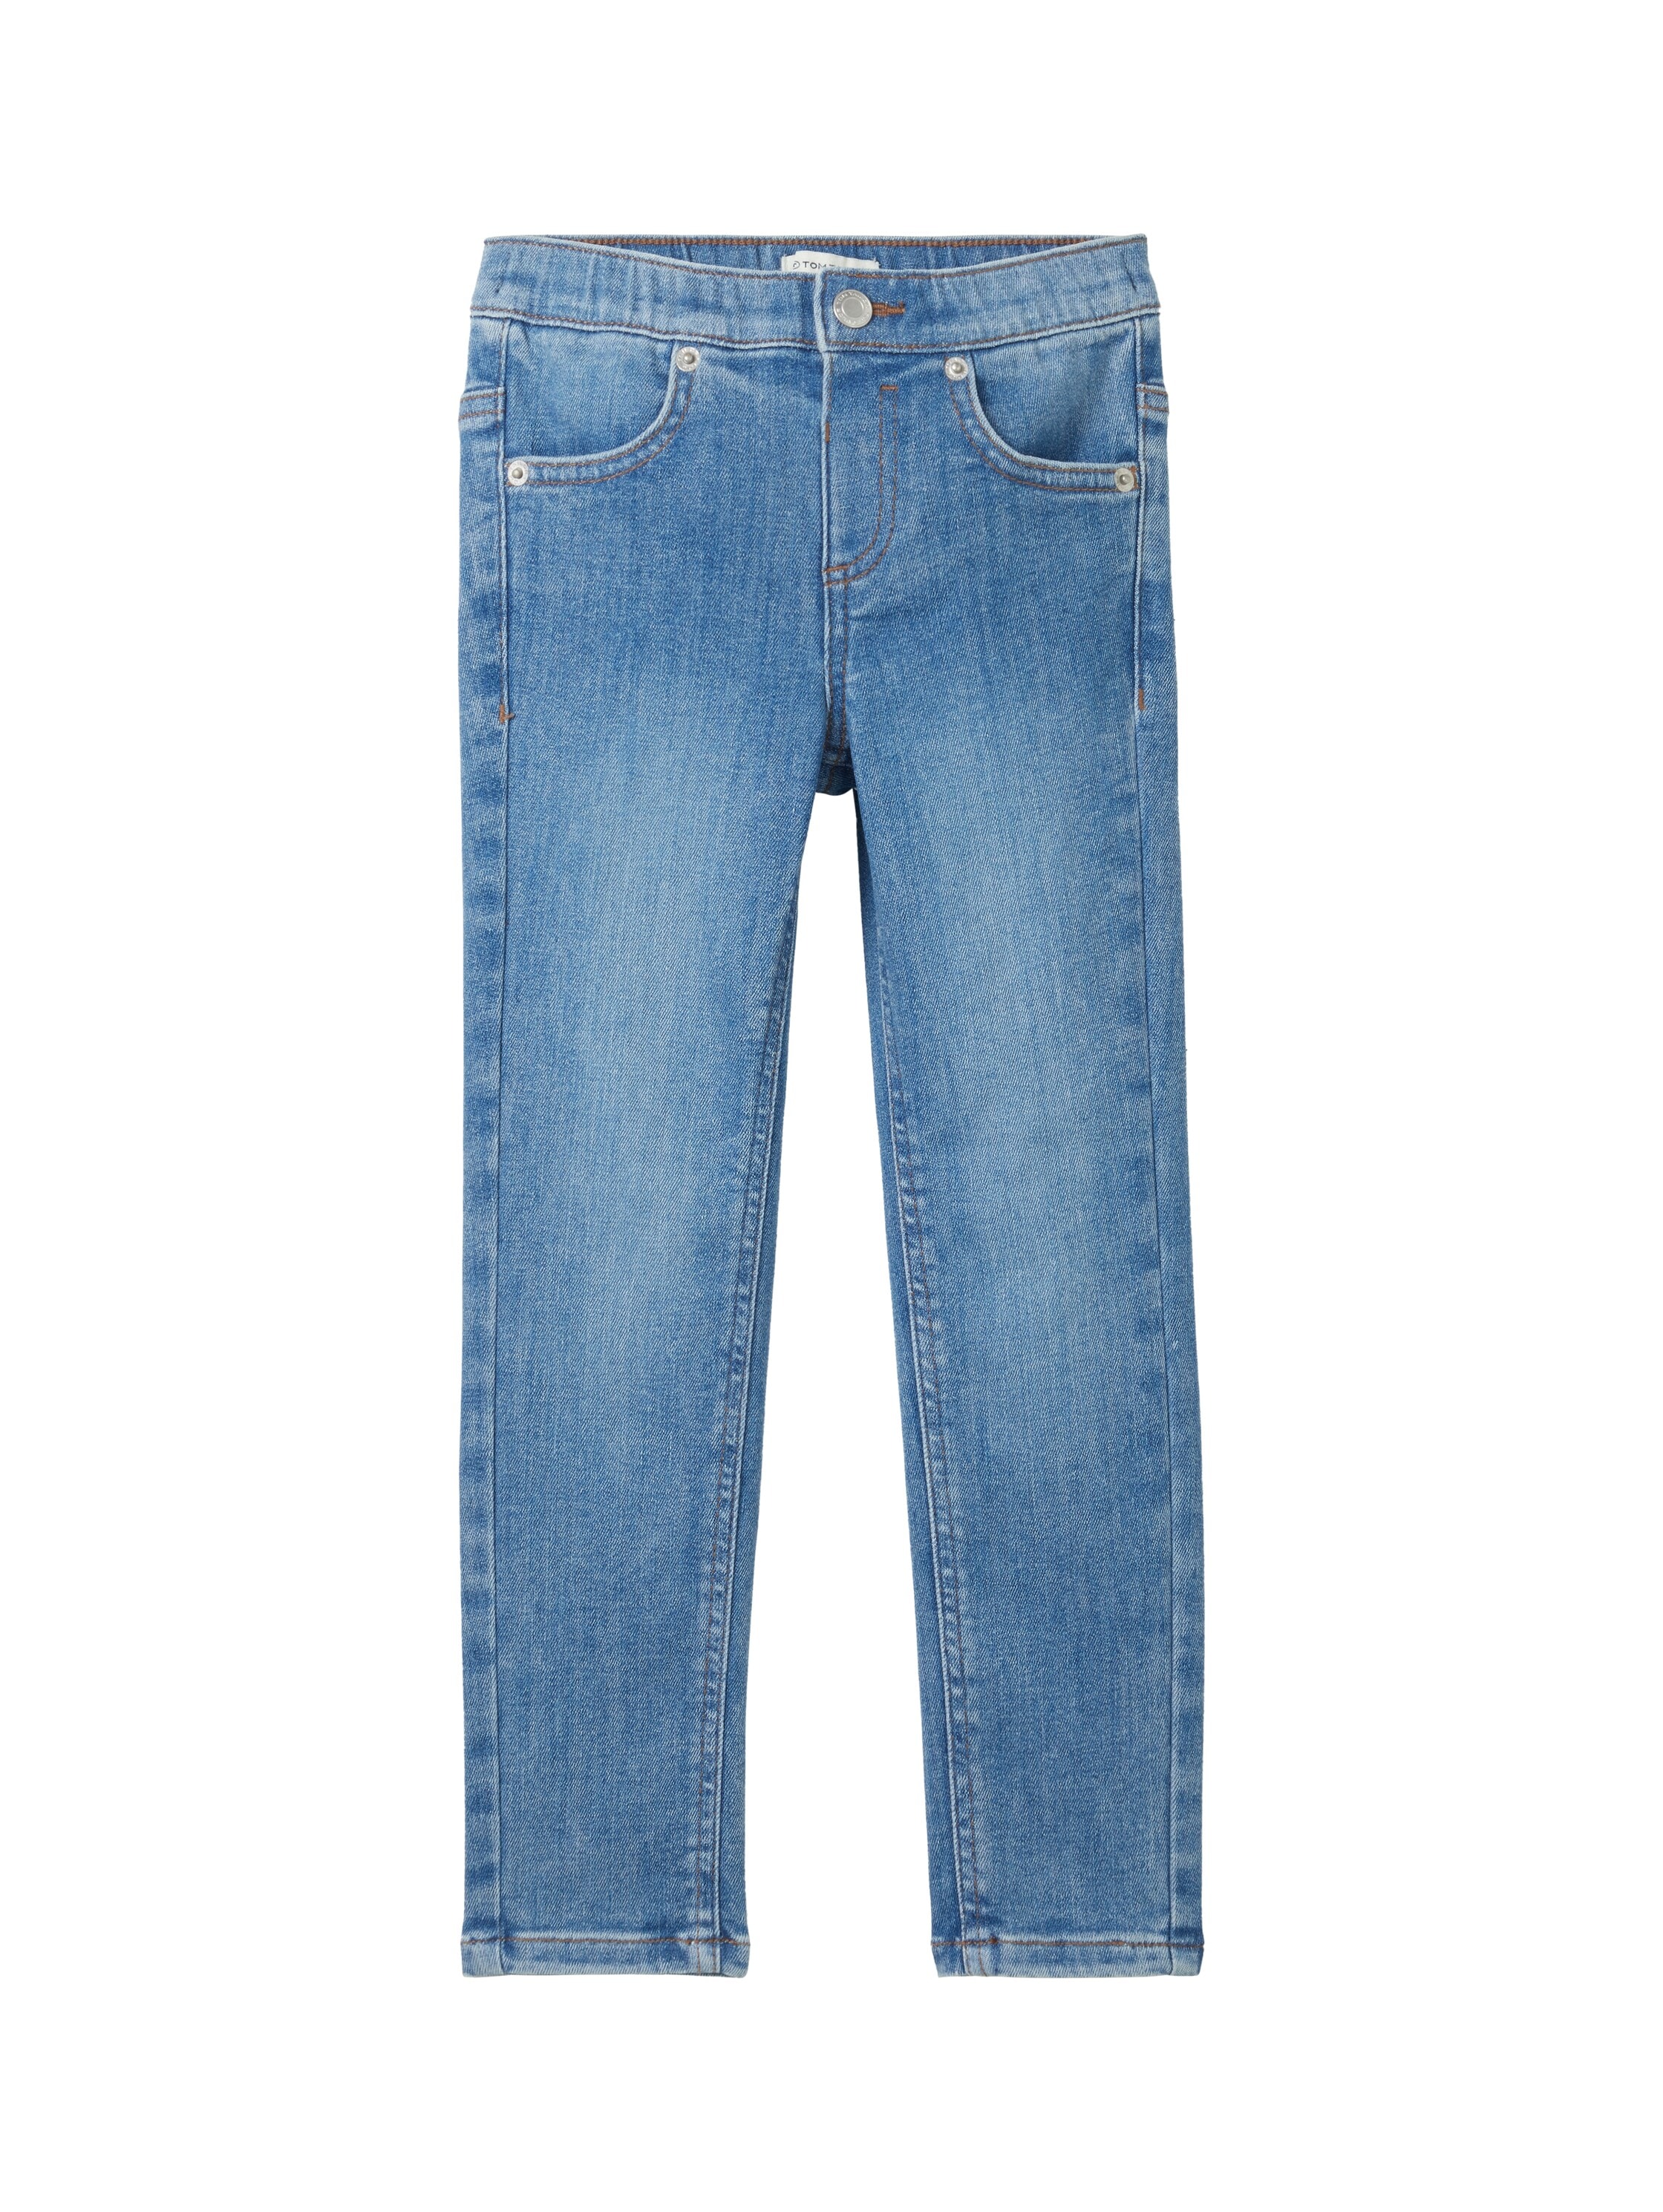 Jeansleggings, in Slim fit- Passform